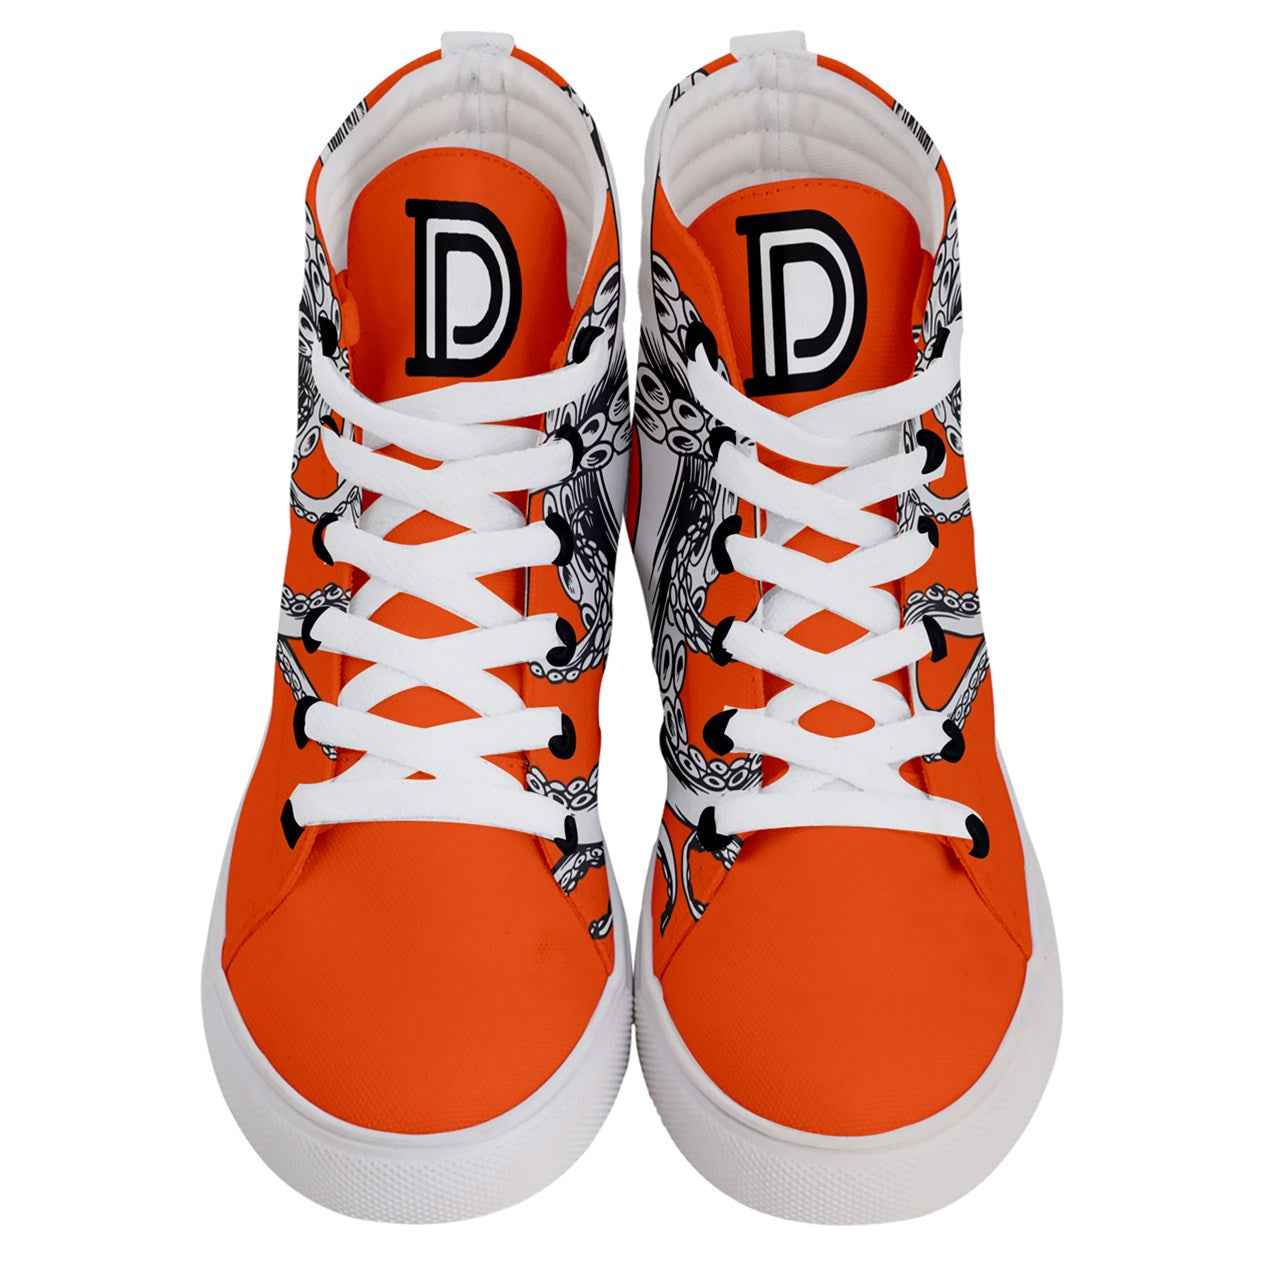 DPIDOL Freestyle Collection Men's Hi-Top Skate Sneakers